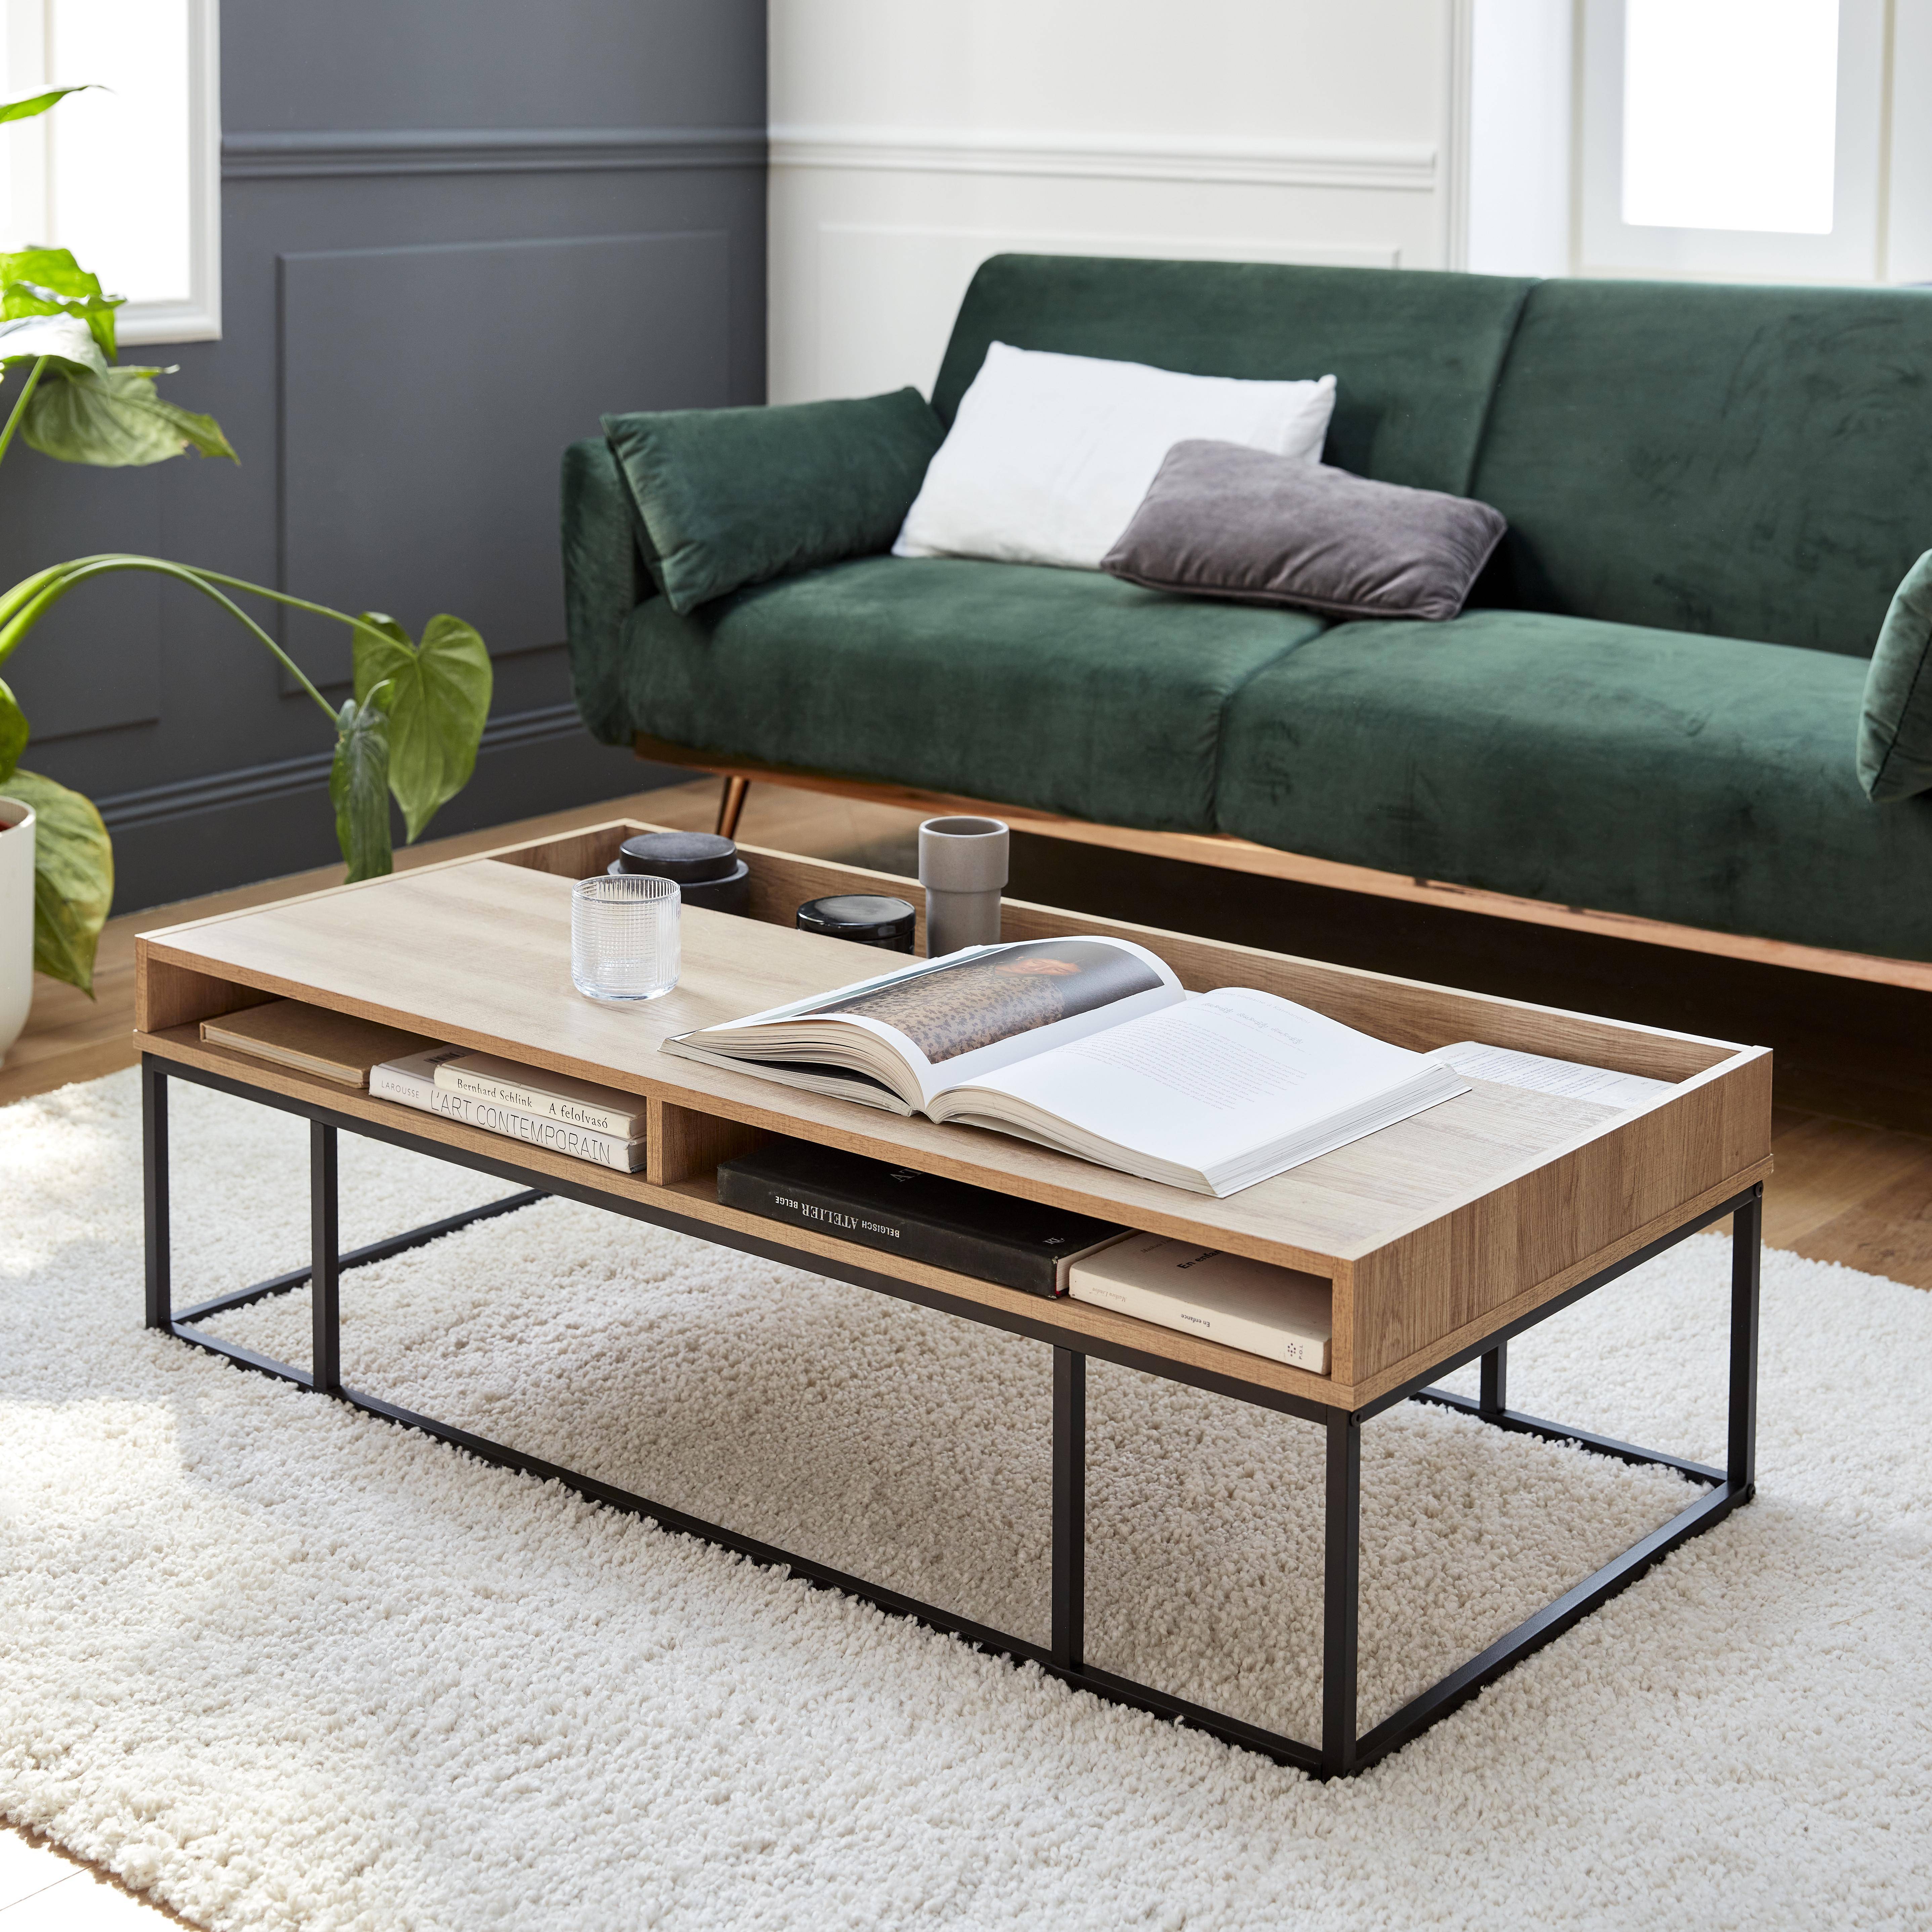 Metal and wood-effect coffee table, 120x59x34.5cm, Magnus, Black,sweeek,Photo1